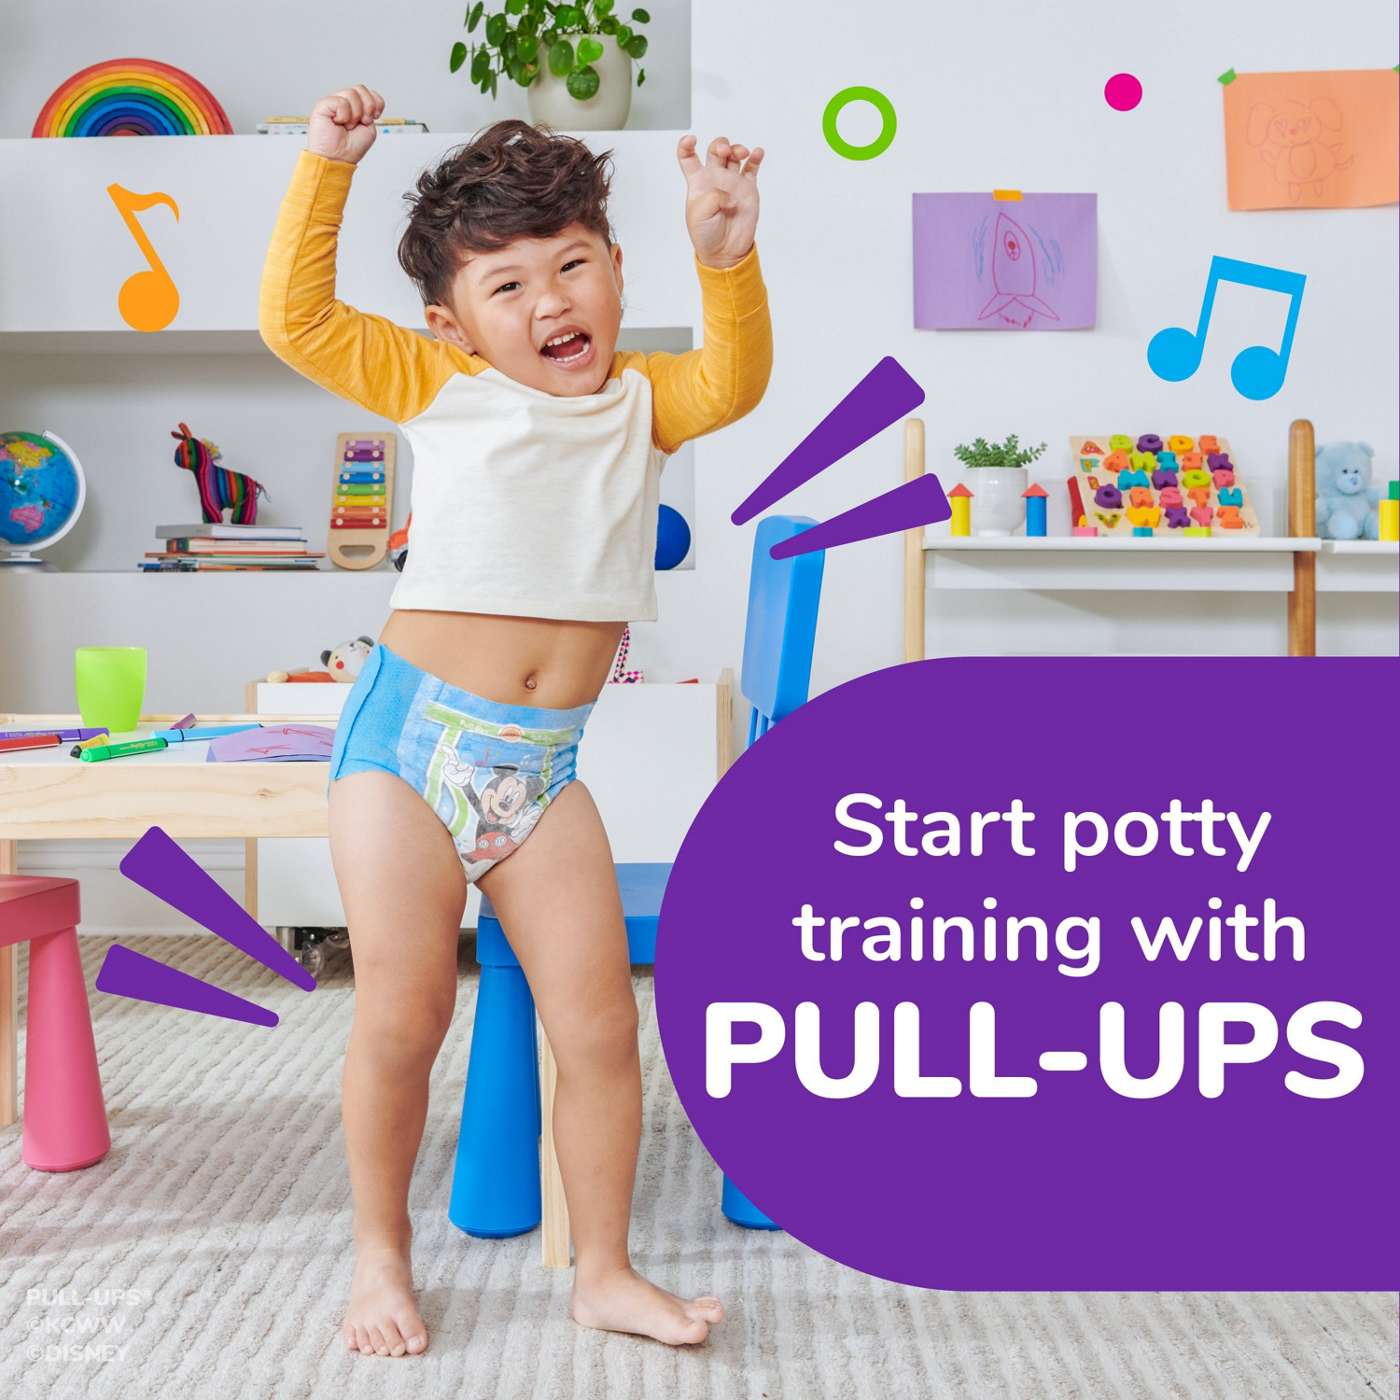 Disney Baby Boys Toddler Potty Training Underwear (Pack of 3)